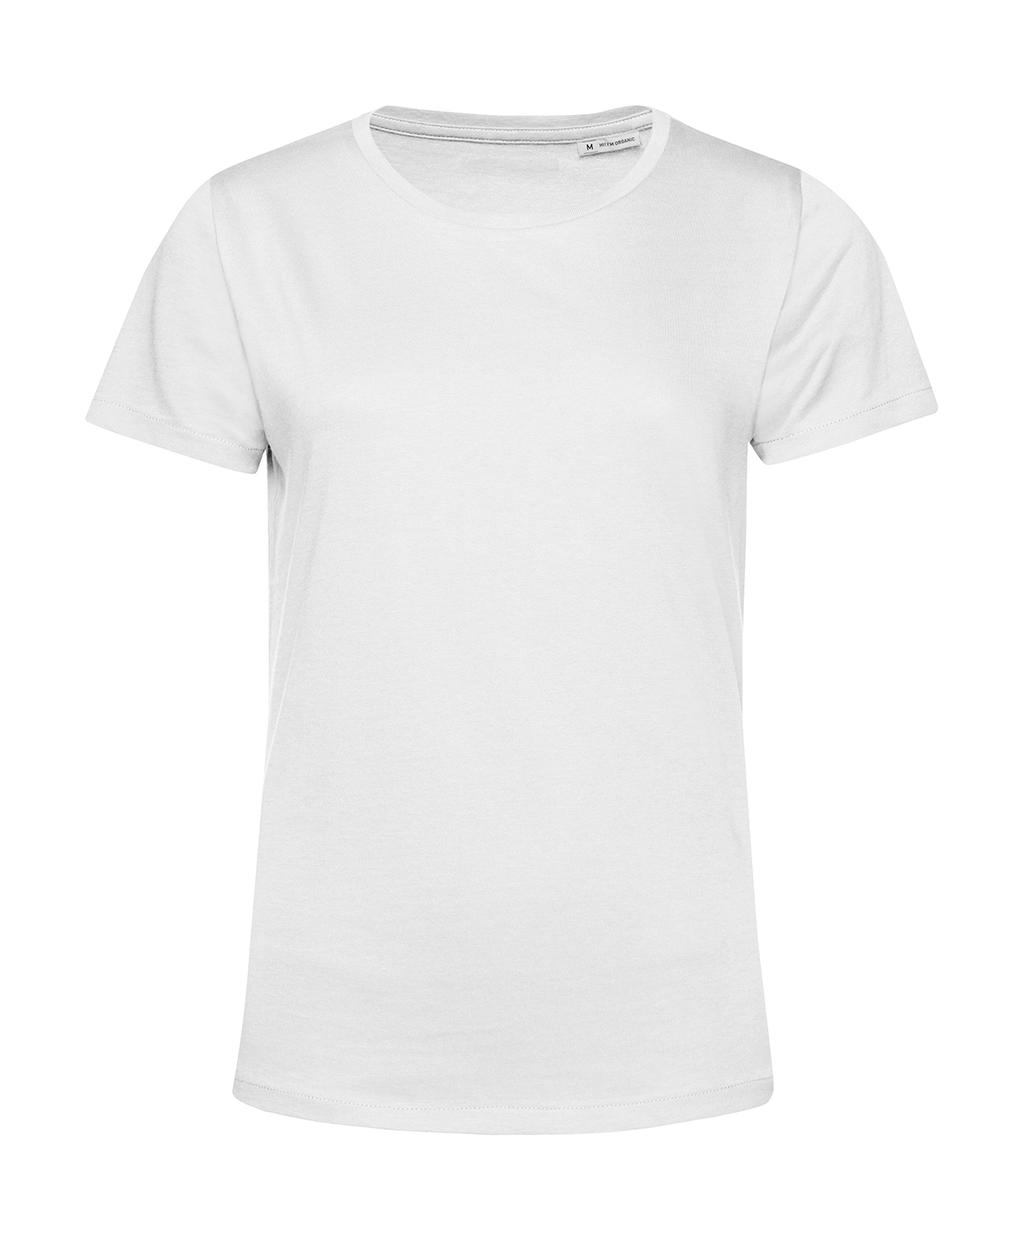 Tričko dámské BC Organic Inspire E150 - bílé, M